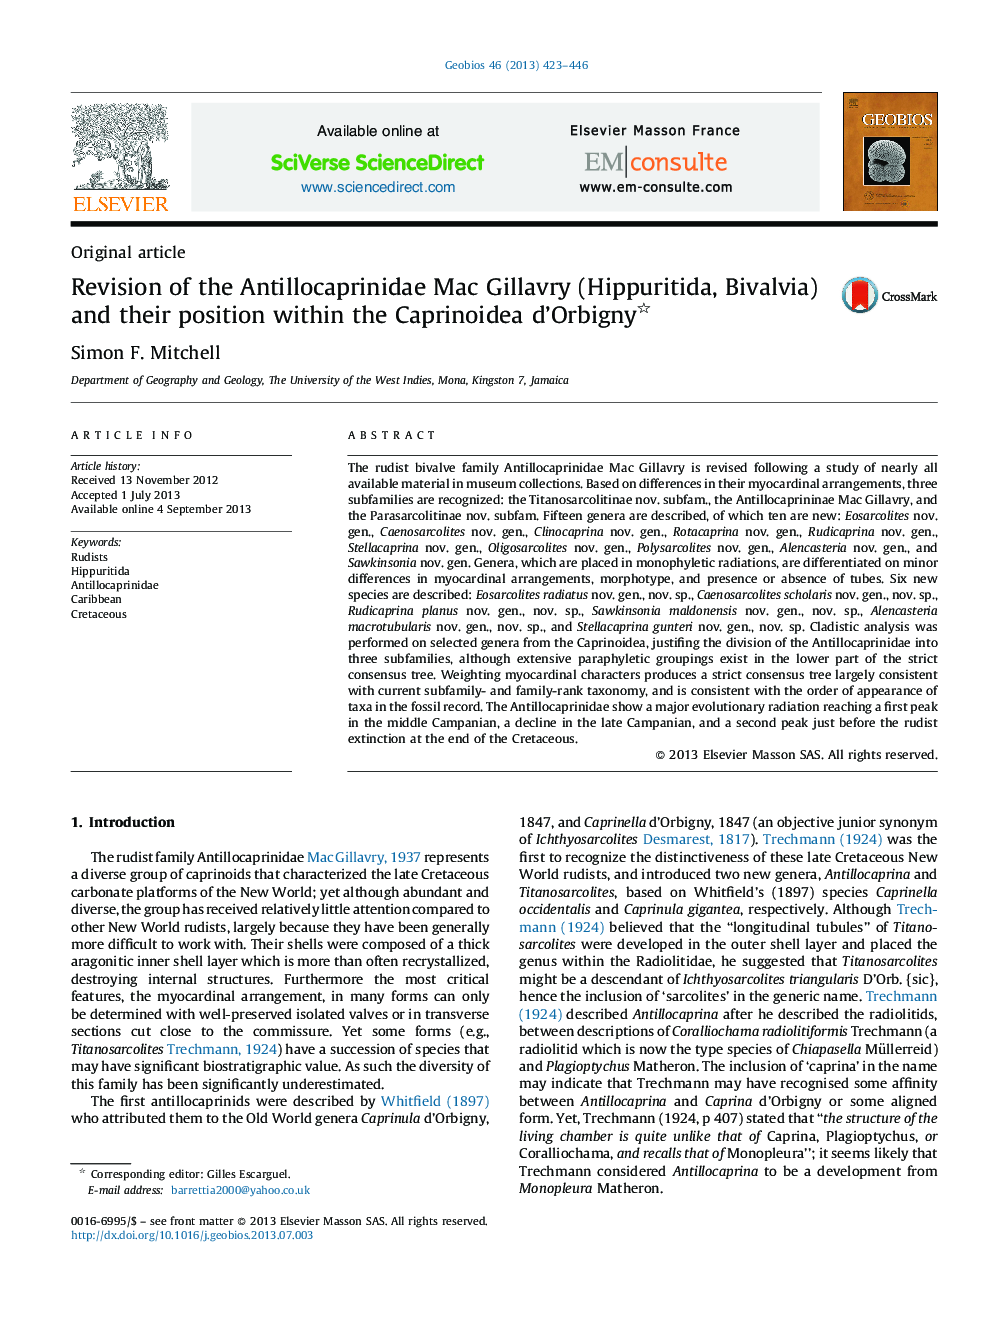 Revision of the Antillocaprinidae Mac Gillavry (Hippuritida, Bivalvia) and their position within the Caprinoidea d’Orbigny 